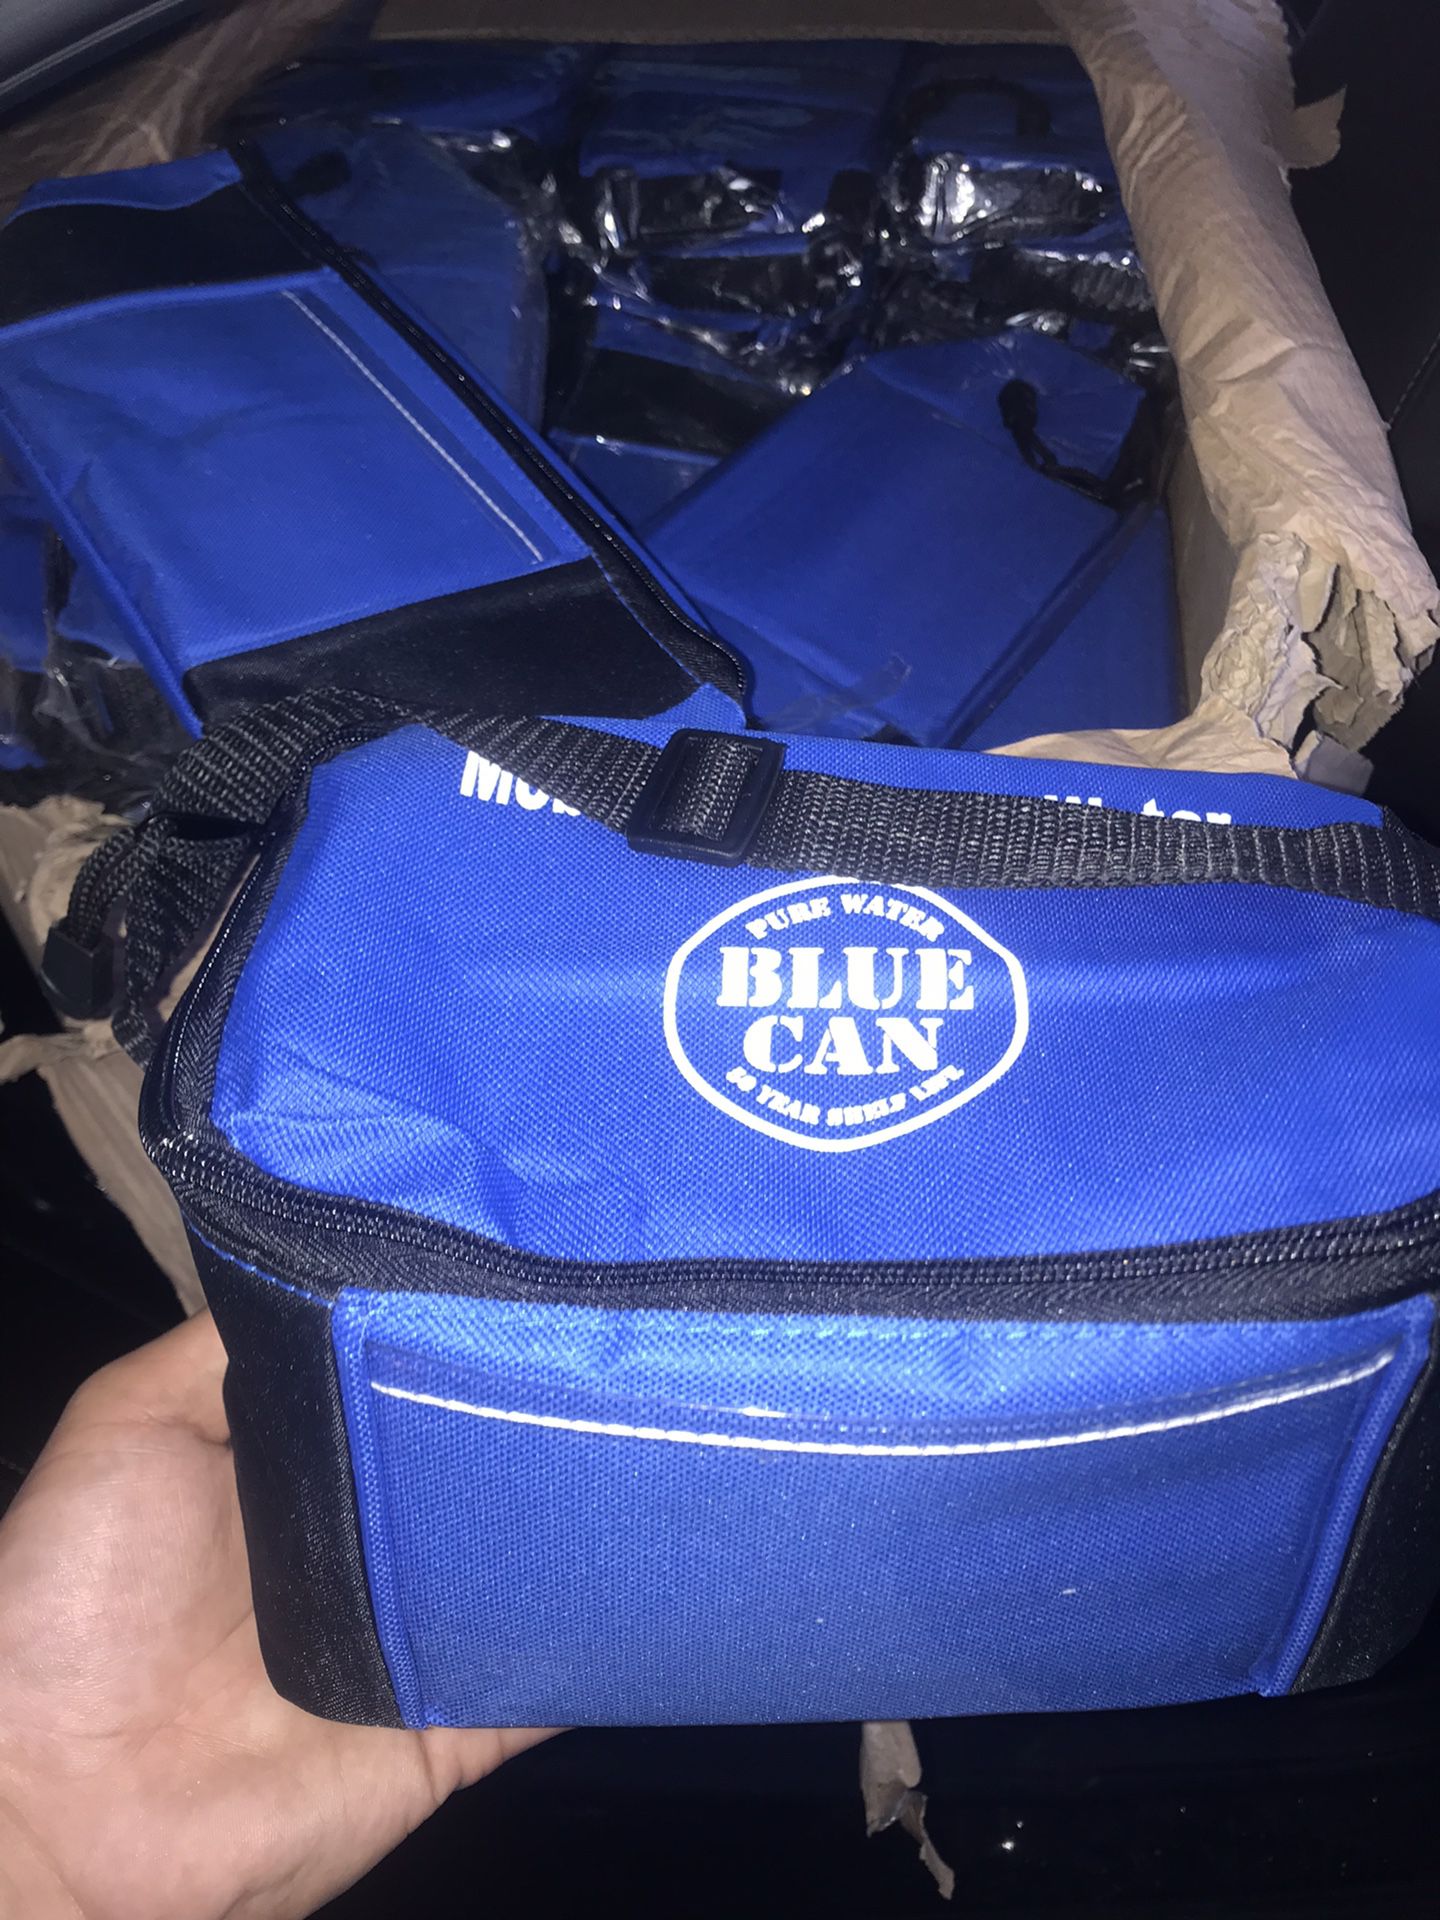 Mobile Emergency Water Cooler Bags